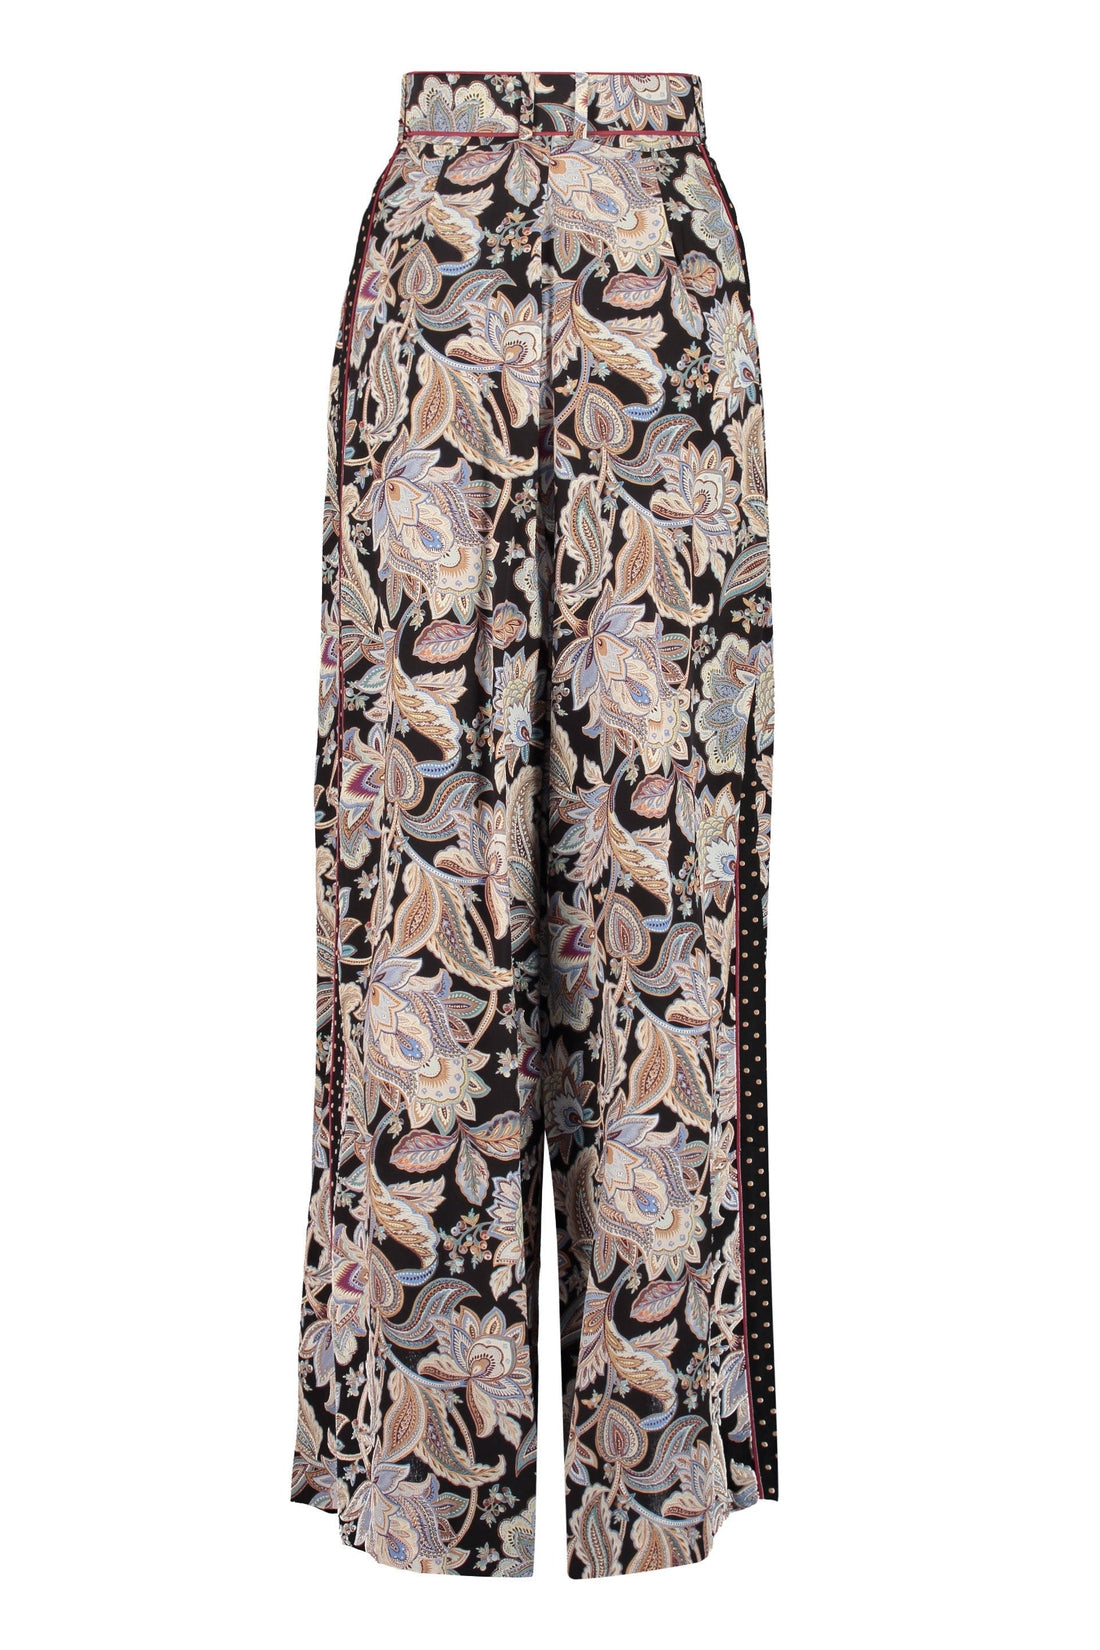 Zimmermann-OUTLET-SALE-Printed silk pants-ARCHIVIST